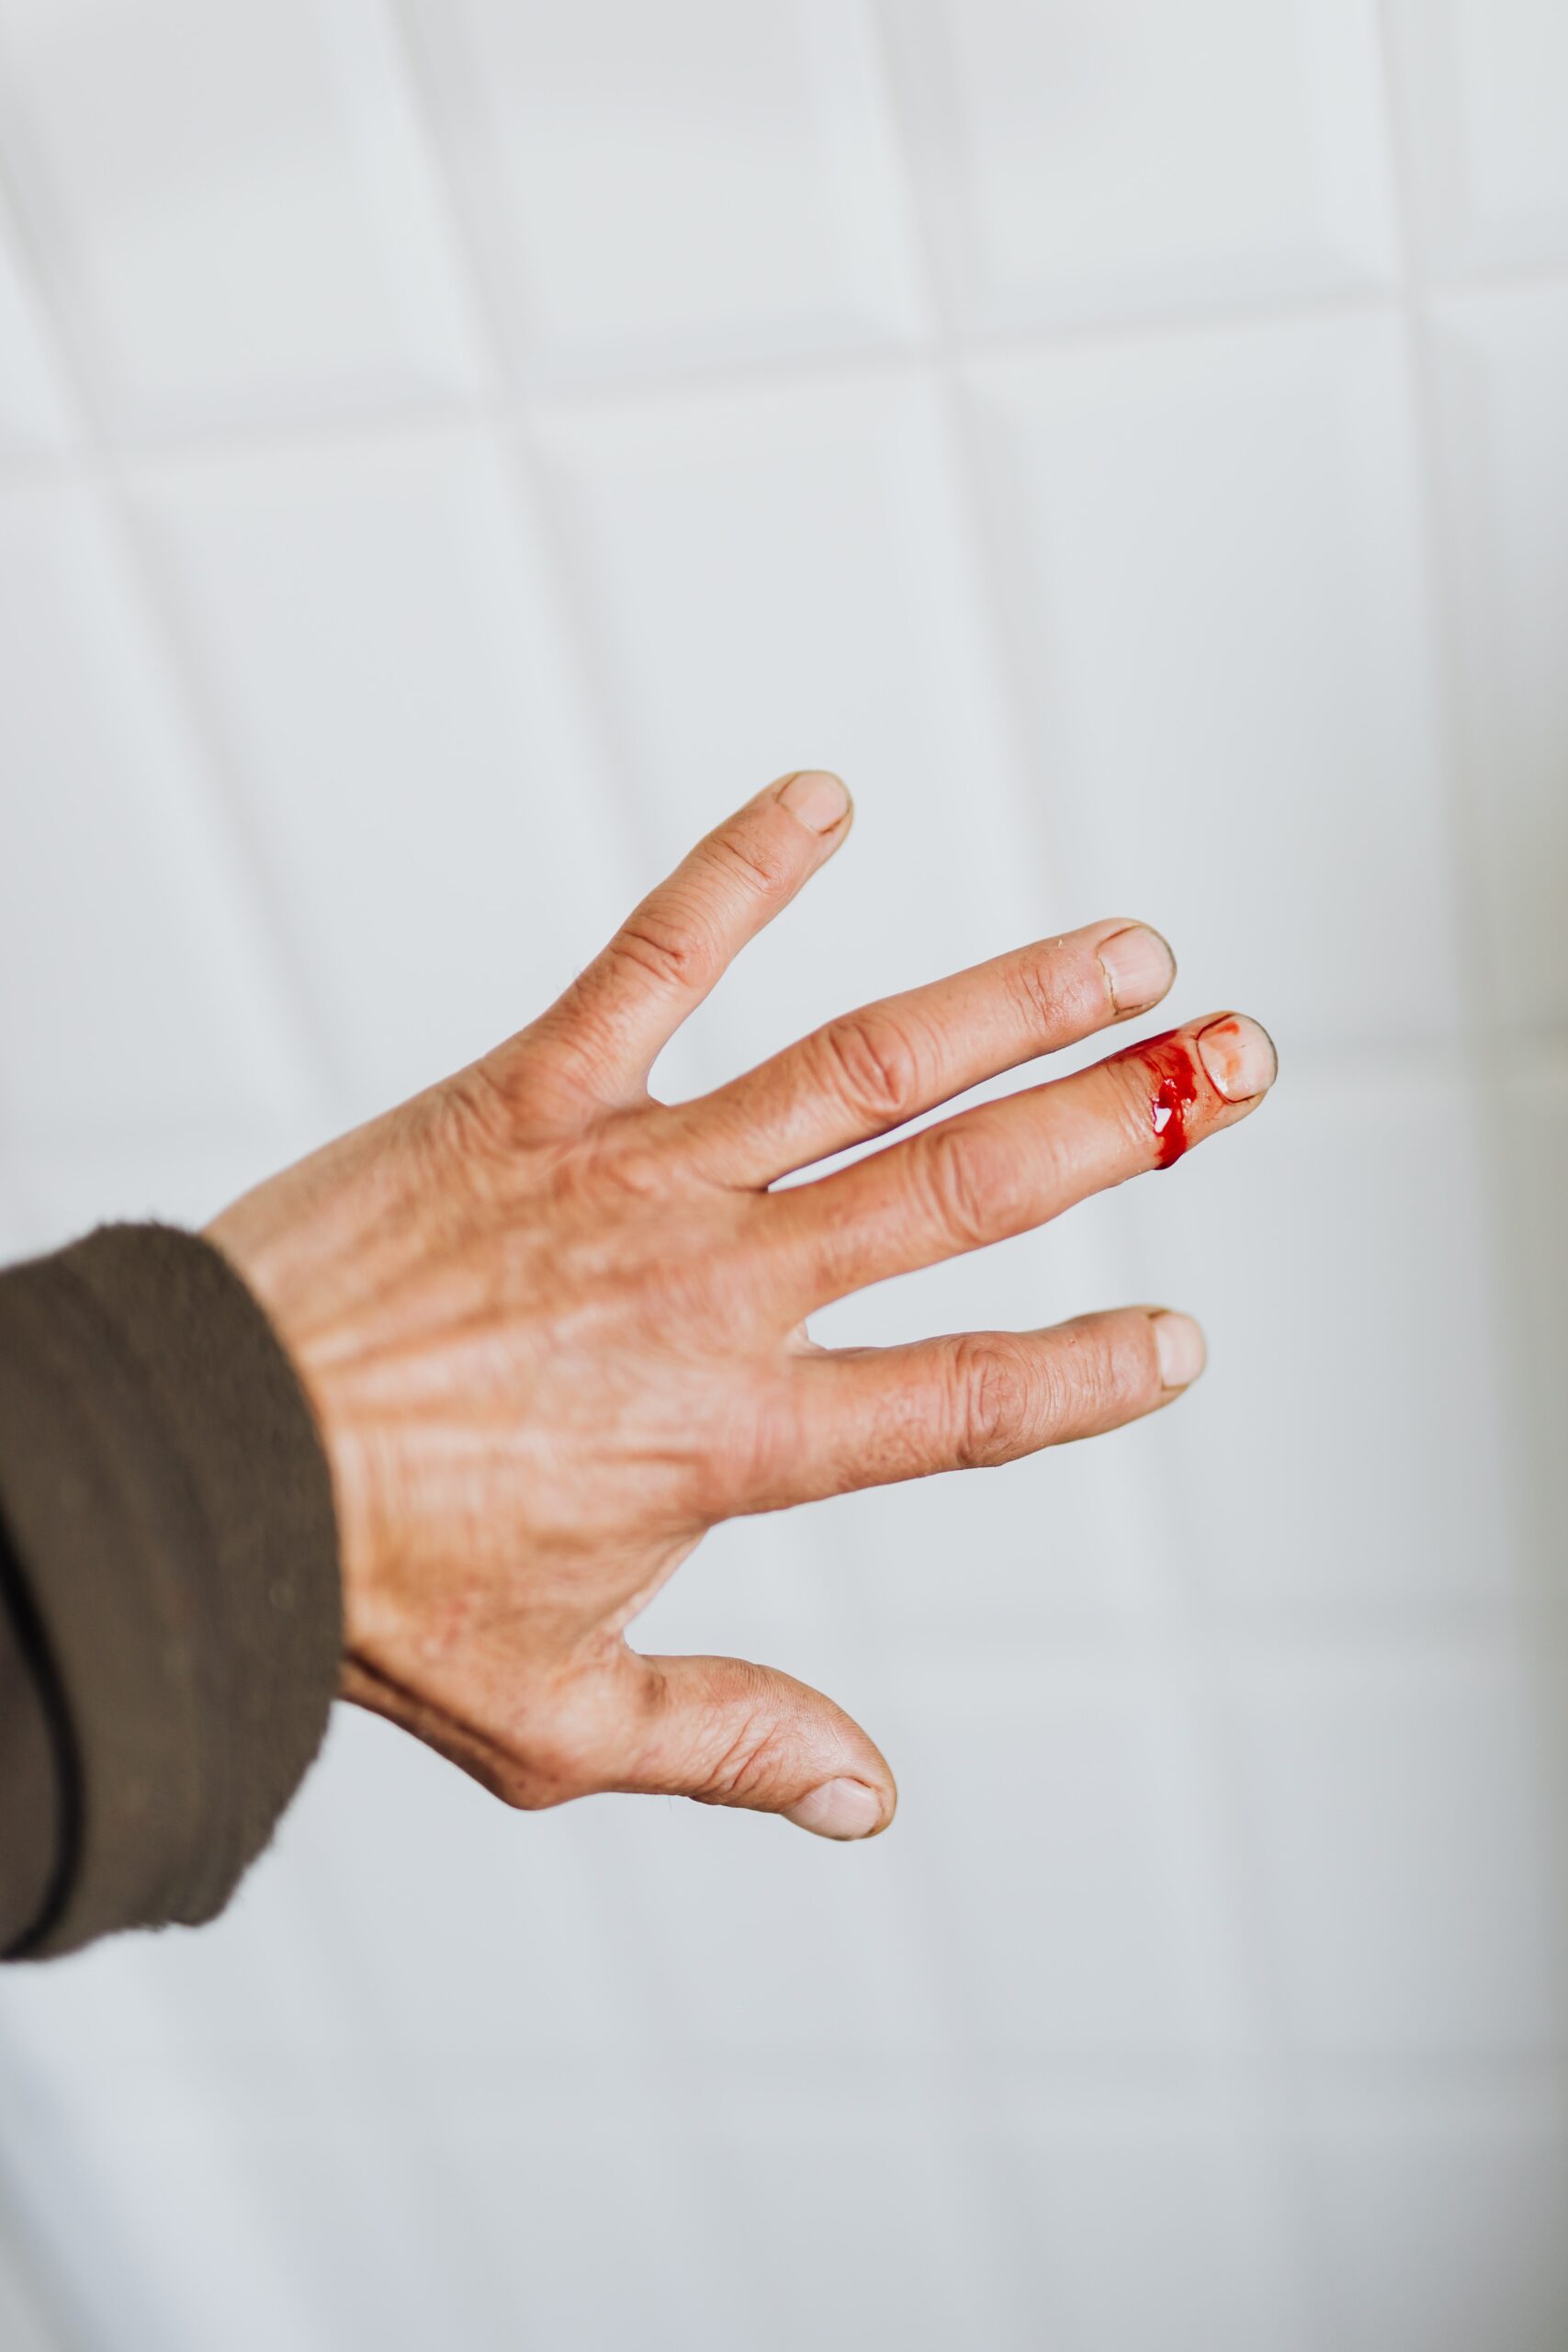 blood spots on carpet from cut finger